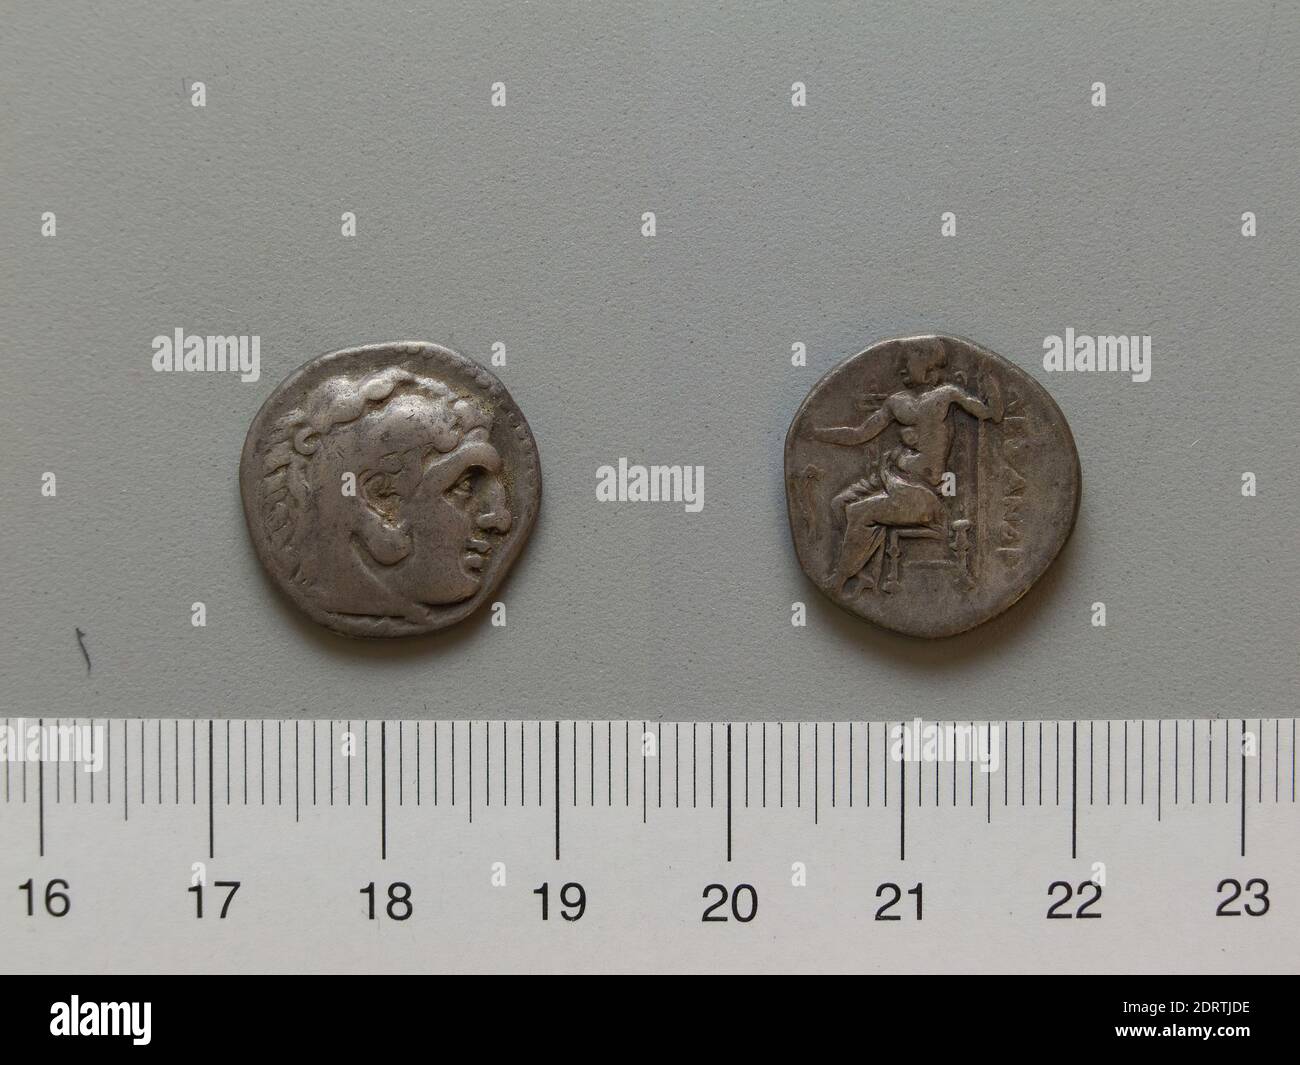 1 Drachm from Uncertain, Greece or Macedonia, 310–275 B.C., Silver, 4.15 g, 12:00, 17 mm, Made in Uncertain, Greece or Macedonia, Greek, 4th–3rd century B.C., Numismatics Stock Photo